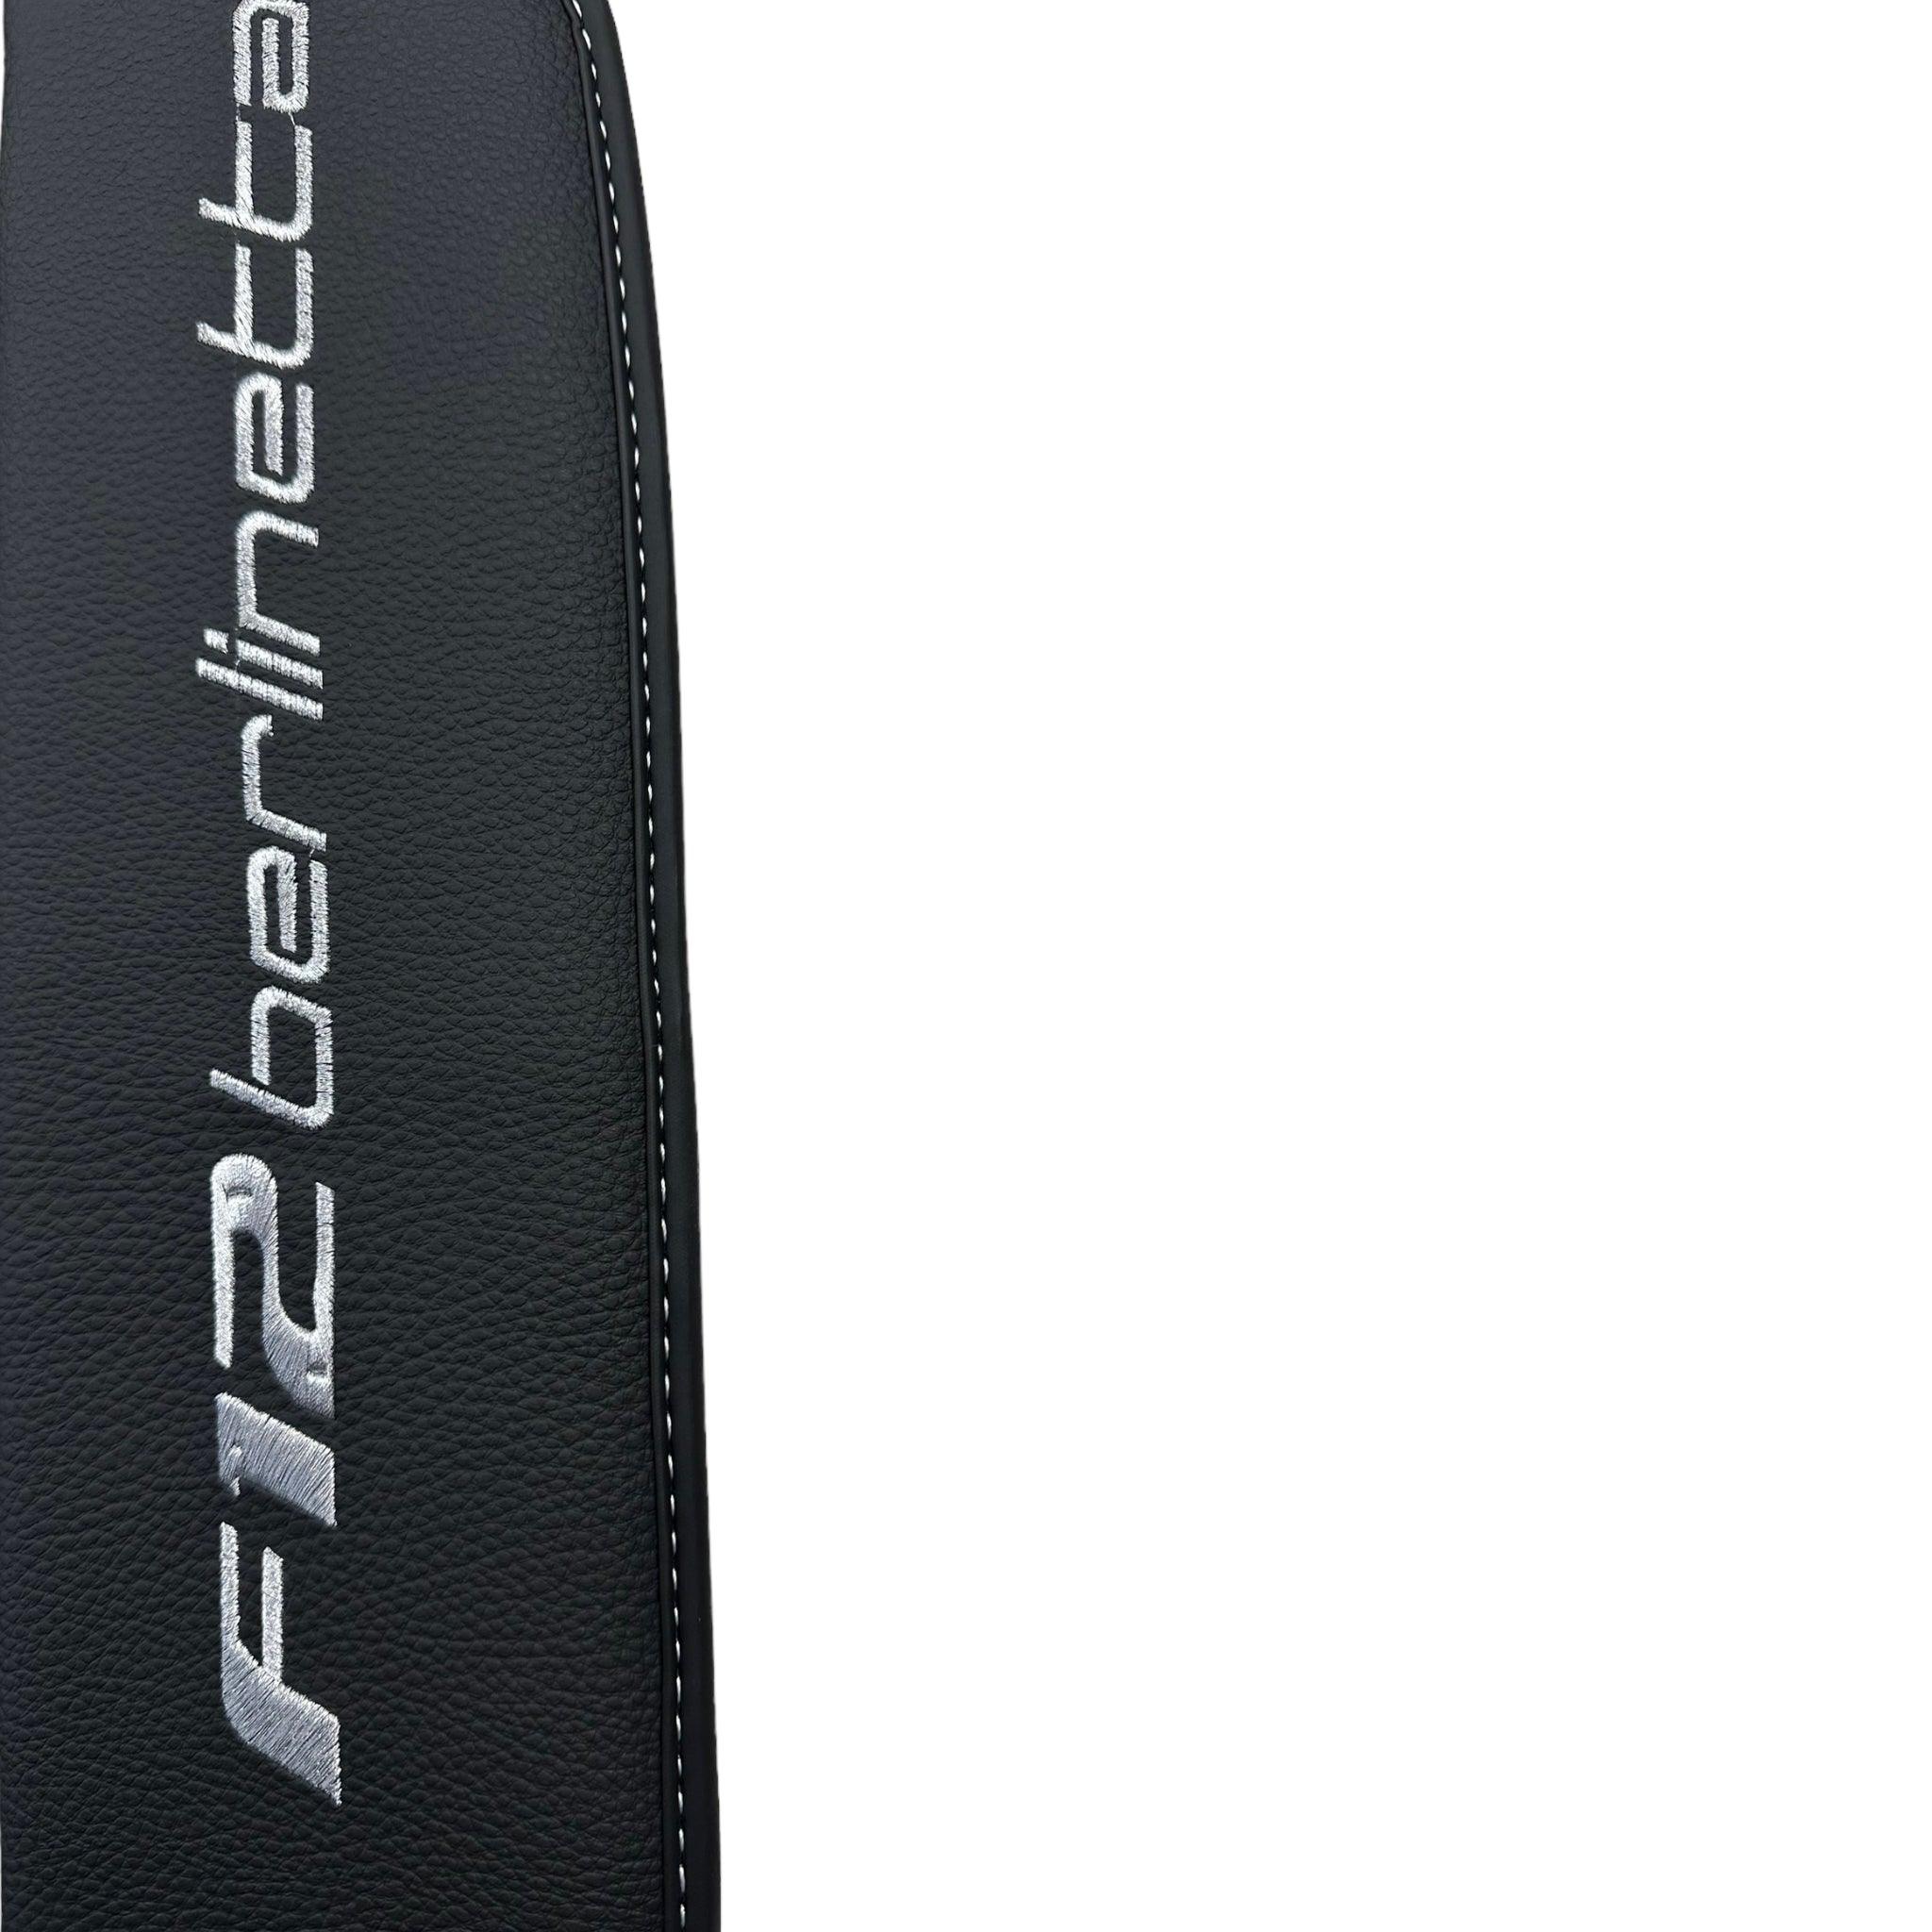 Black Floor Mats for Ferrari F12 Berlinetta (2012-2022) with Leather